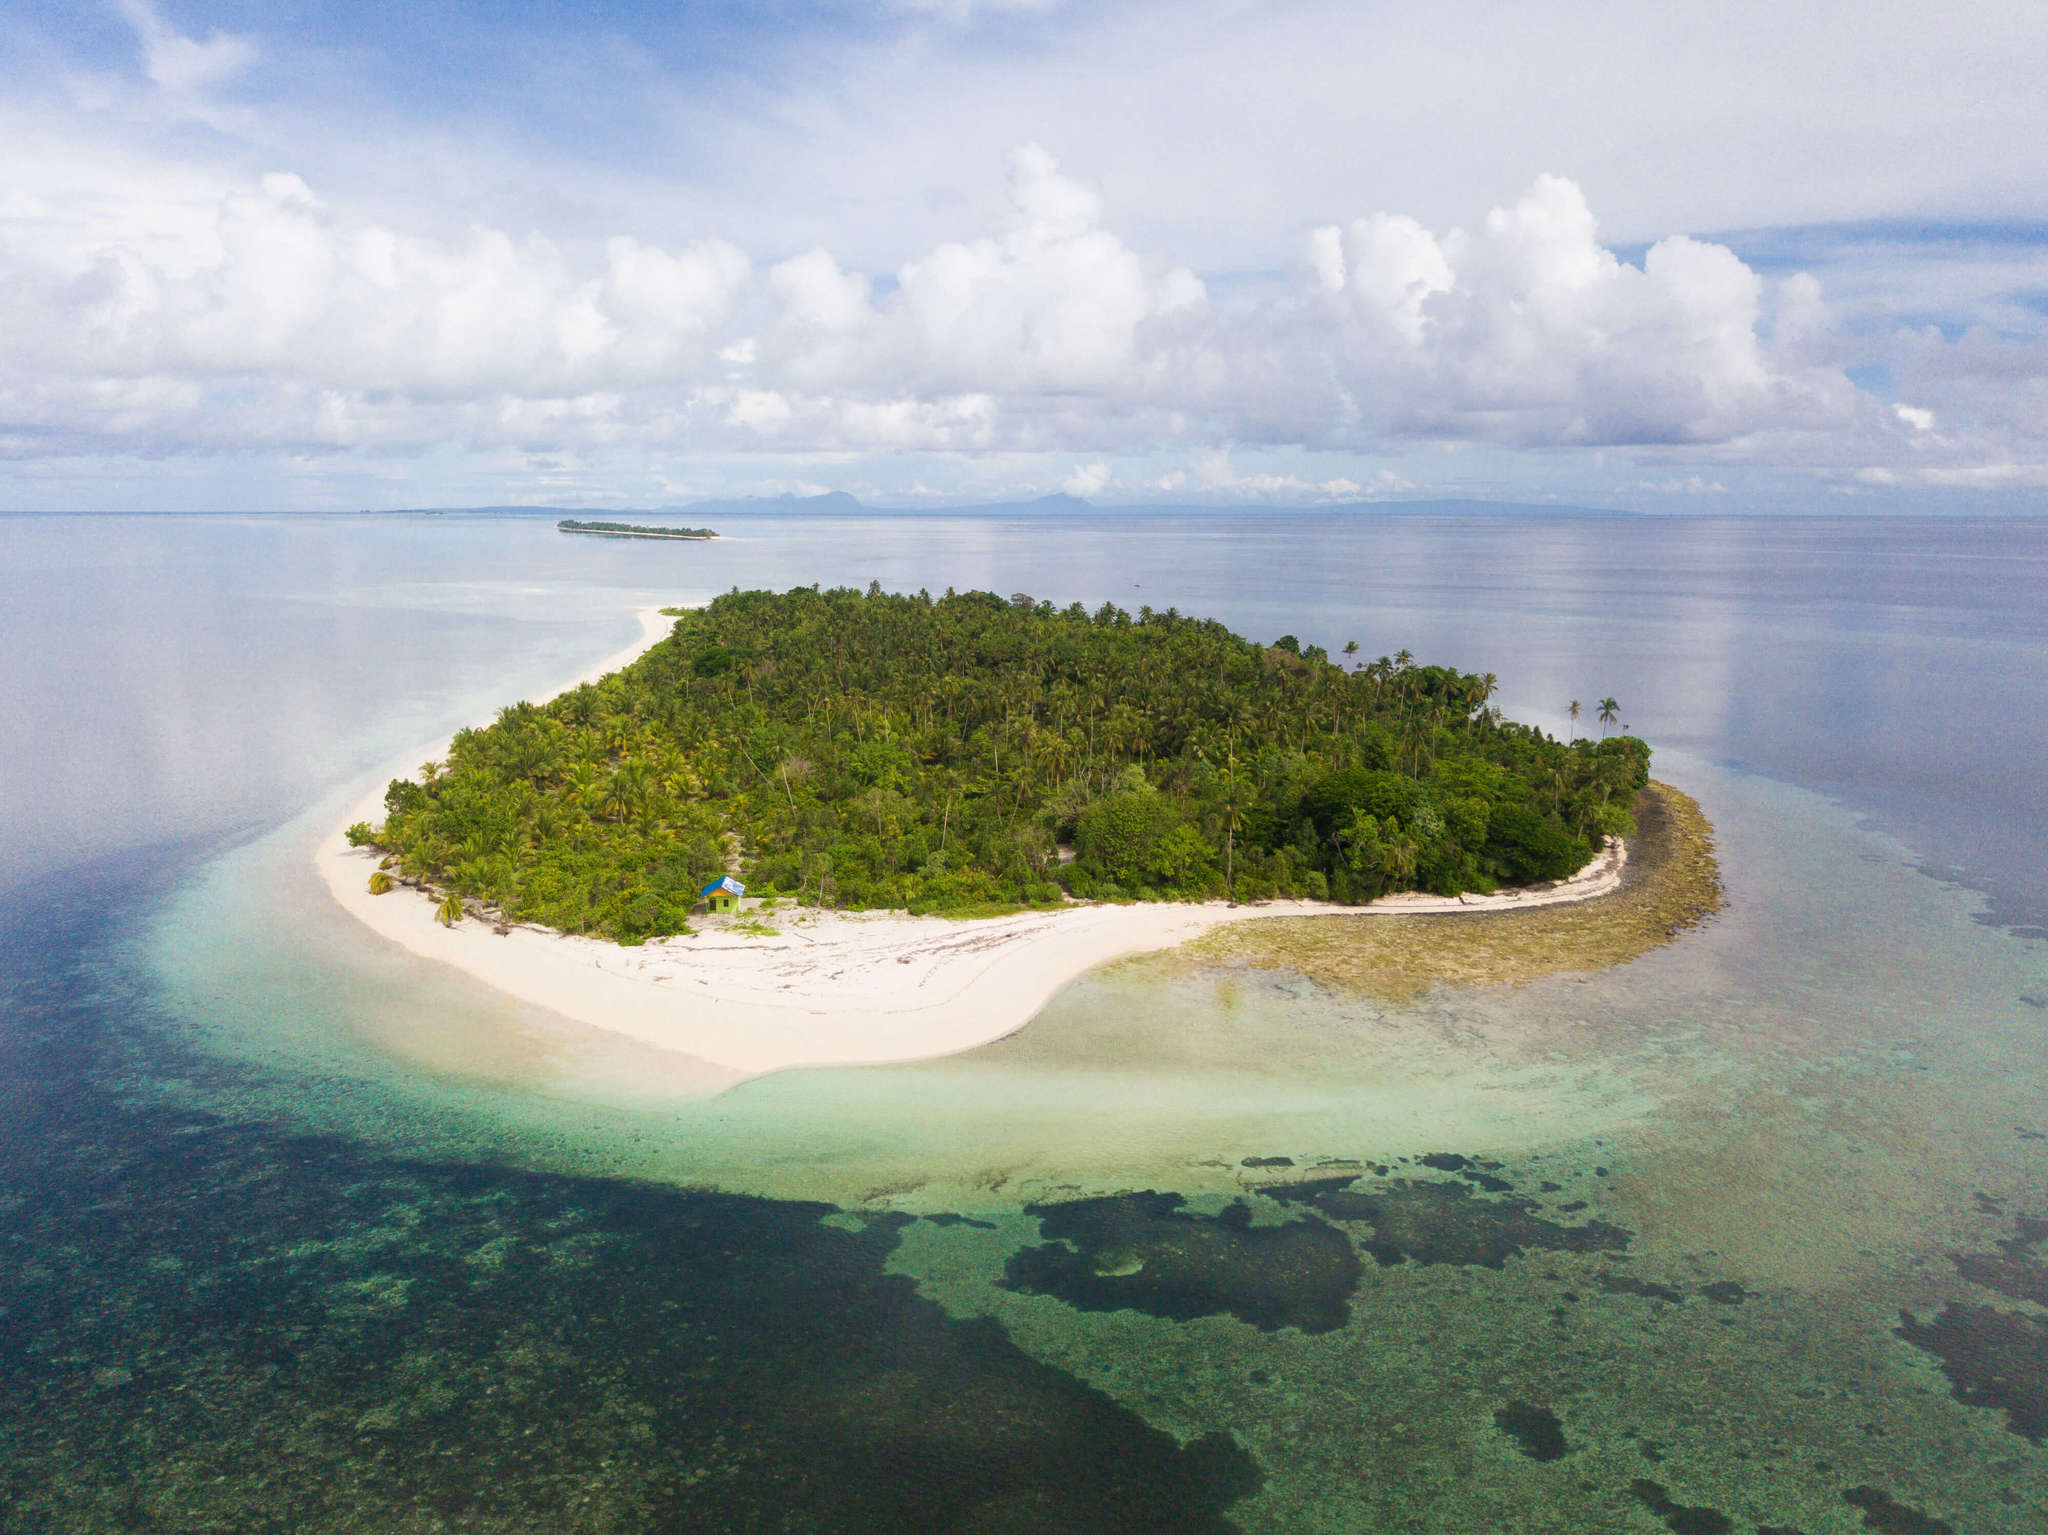 Remote island. Острова архипелаги. Архипелаг Мергуи. Архипелаг 2022. Буру (малайский архипелаг).